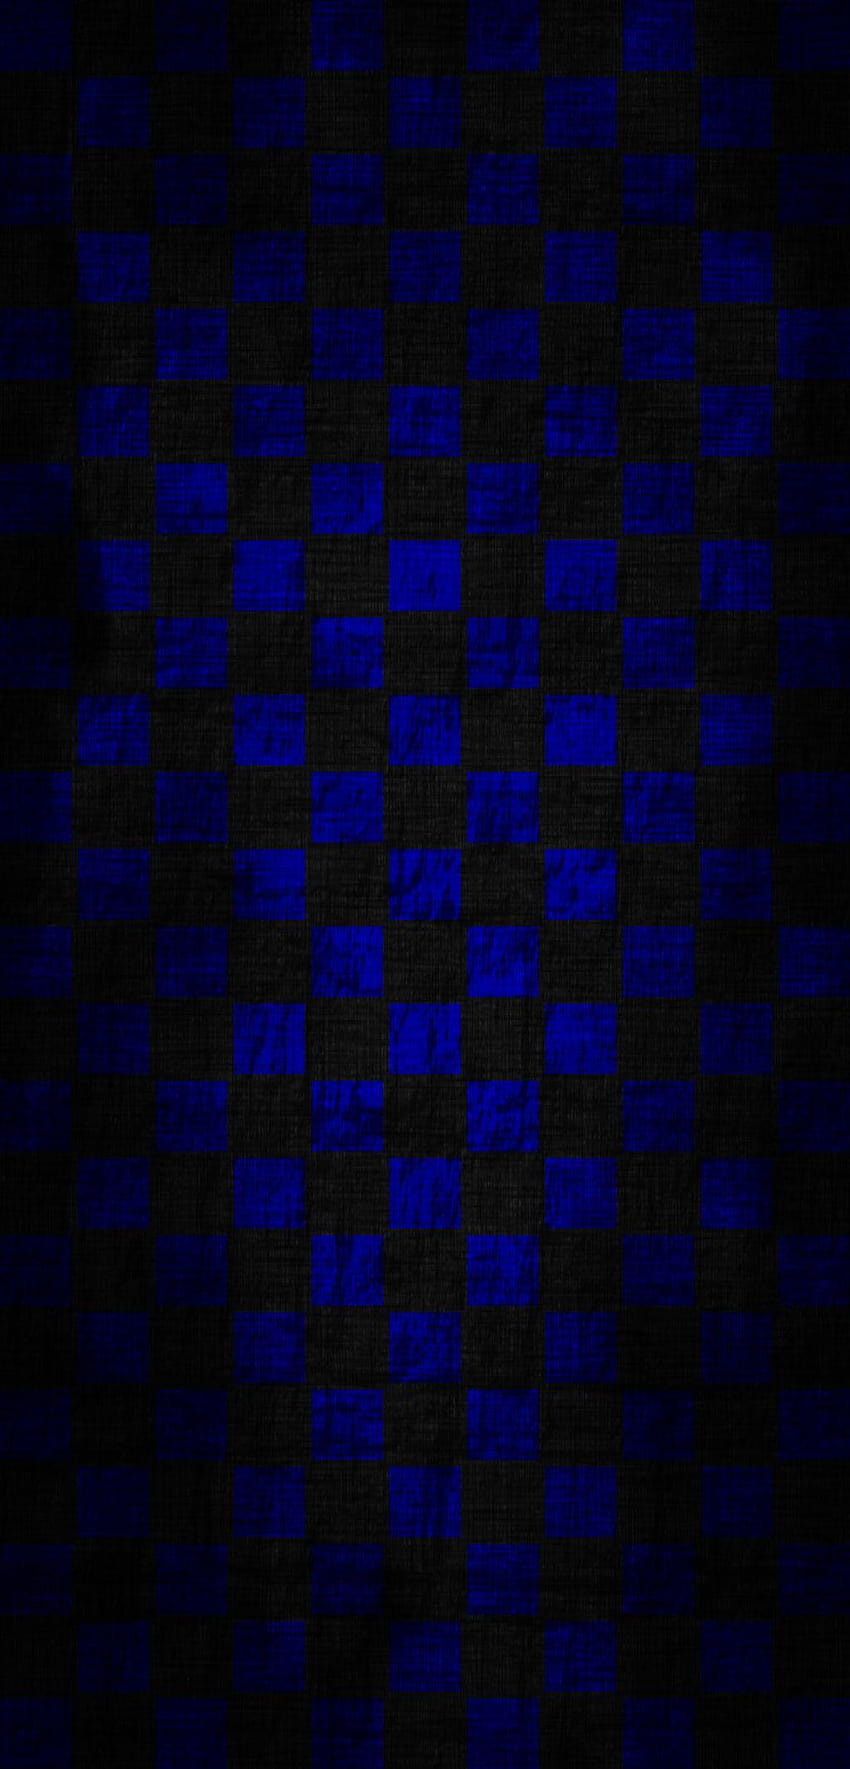 s de caja personalizados a cuadros azules y negros por xXxBulletproofxXx, a cuadros azul fondo de pantalla del teléfono